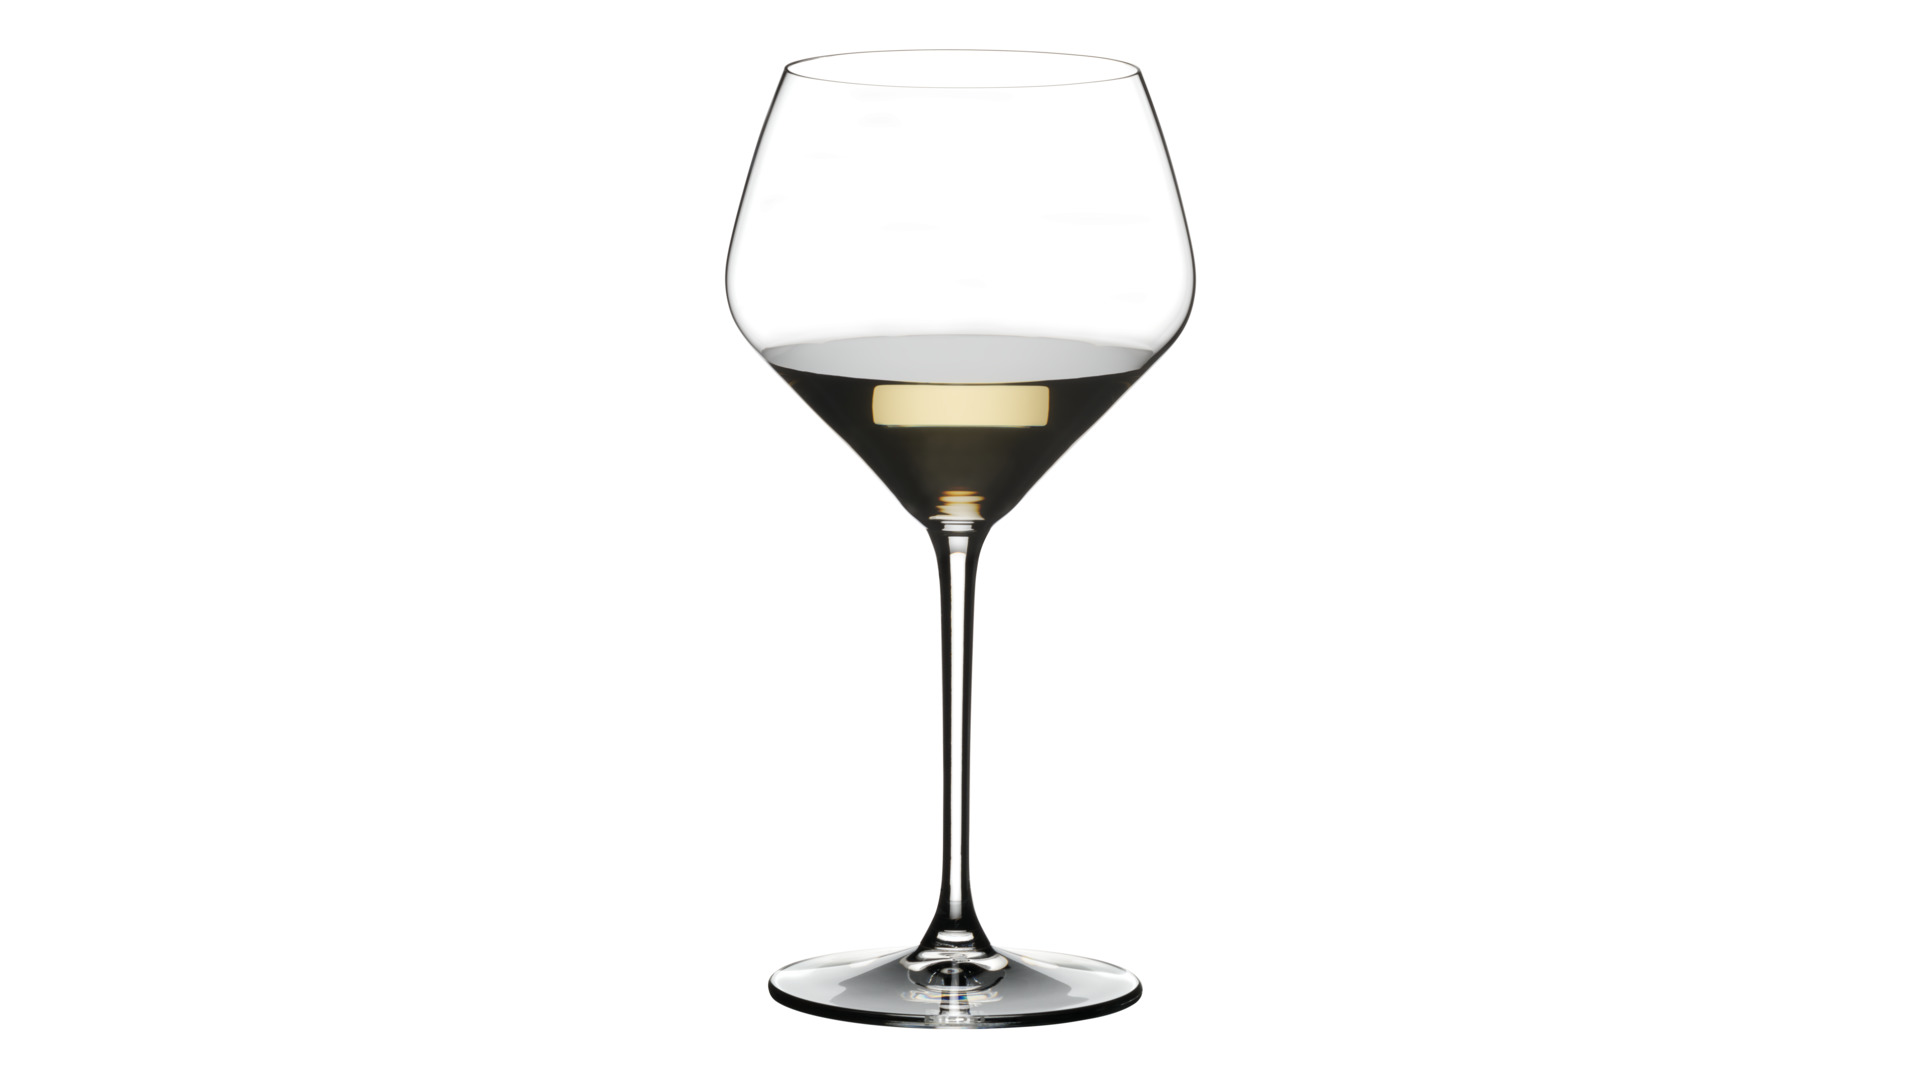 Набор бокалов для белого вина Riedel Heart to Heart, шардонне 670 мл, h23 см, 2 шт, стекло хрустальн